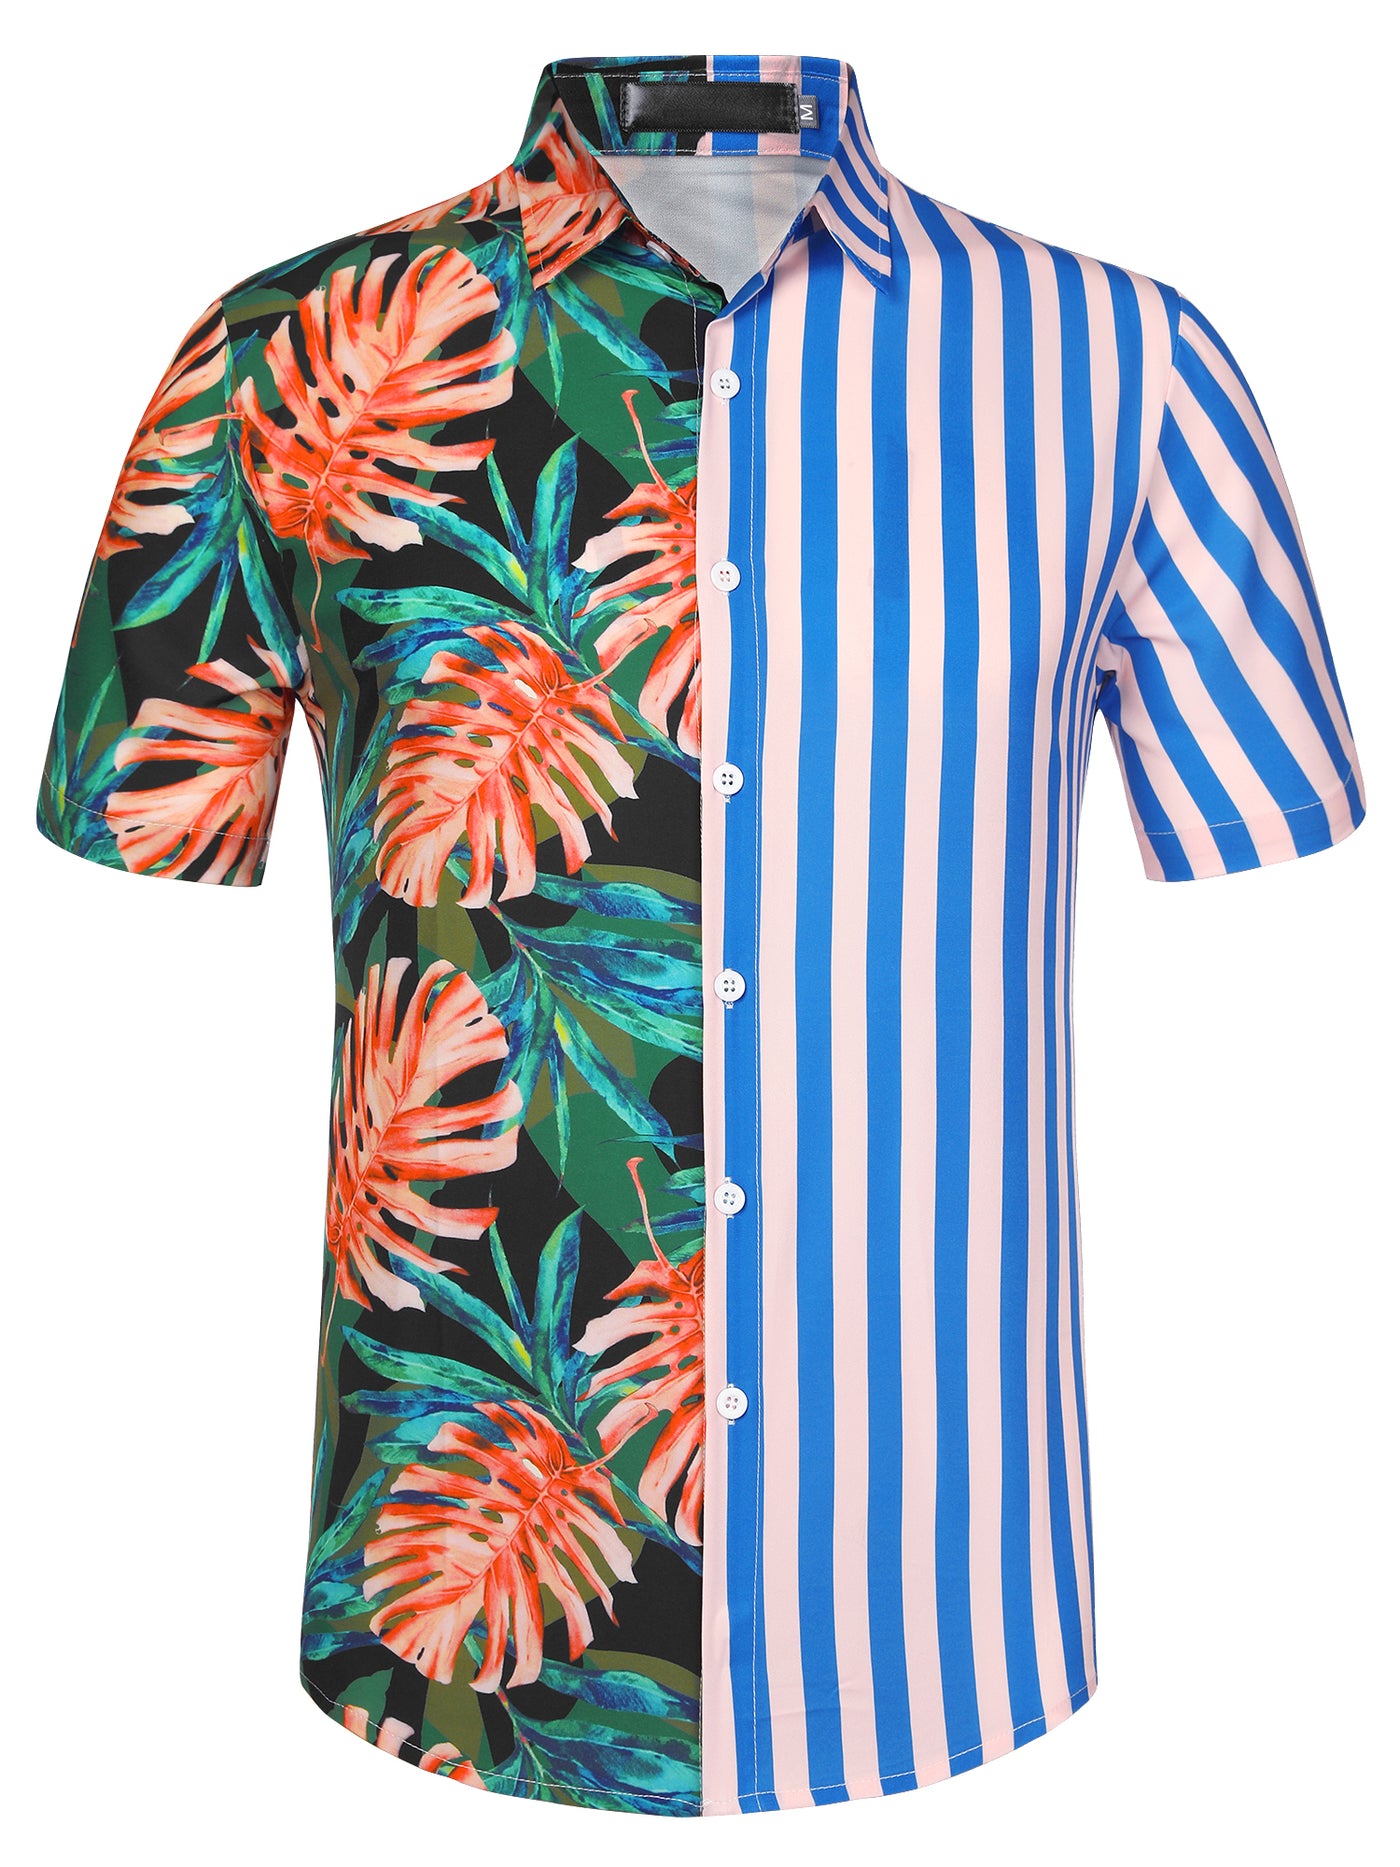 Bublédon Men's Summer Printed Shirt Casual Button Up Floral Stripes Patchwork Beach Shirts